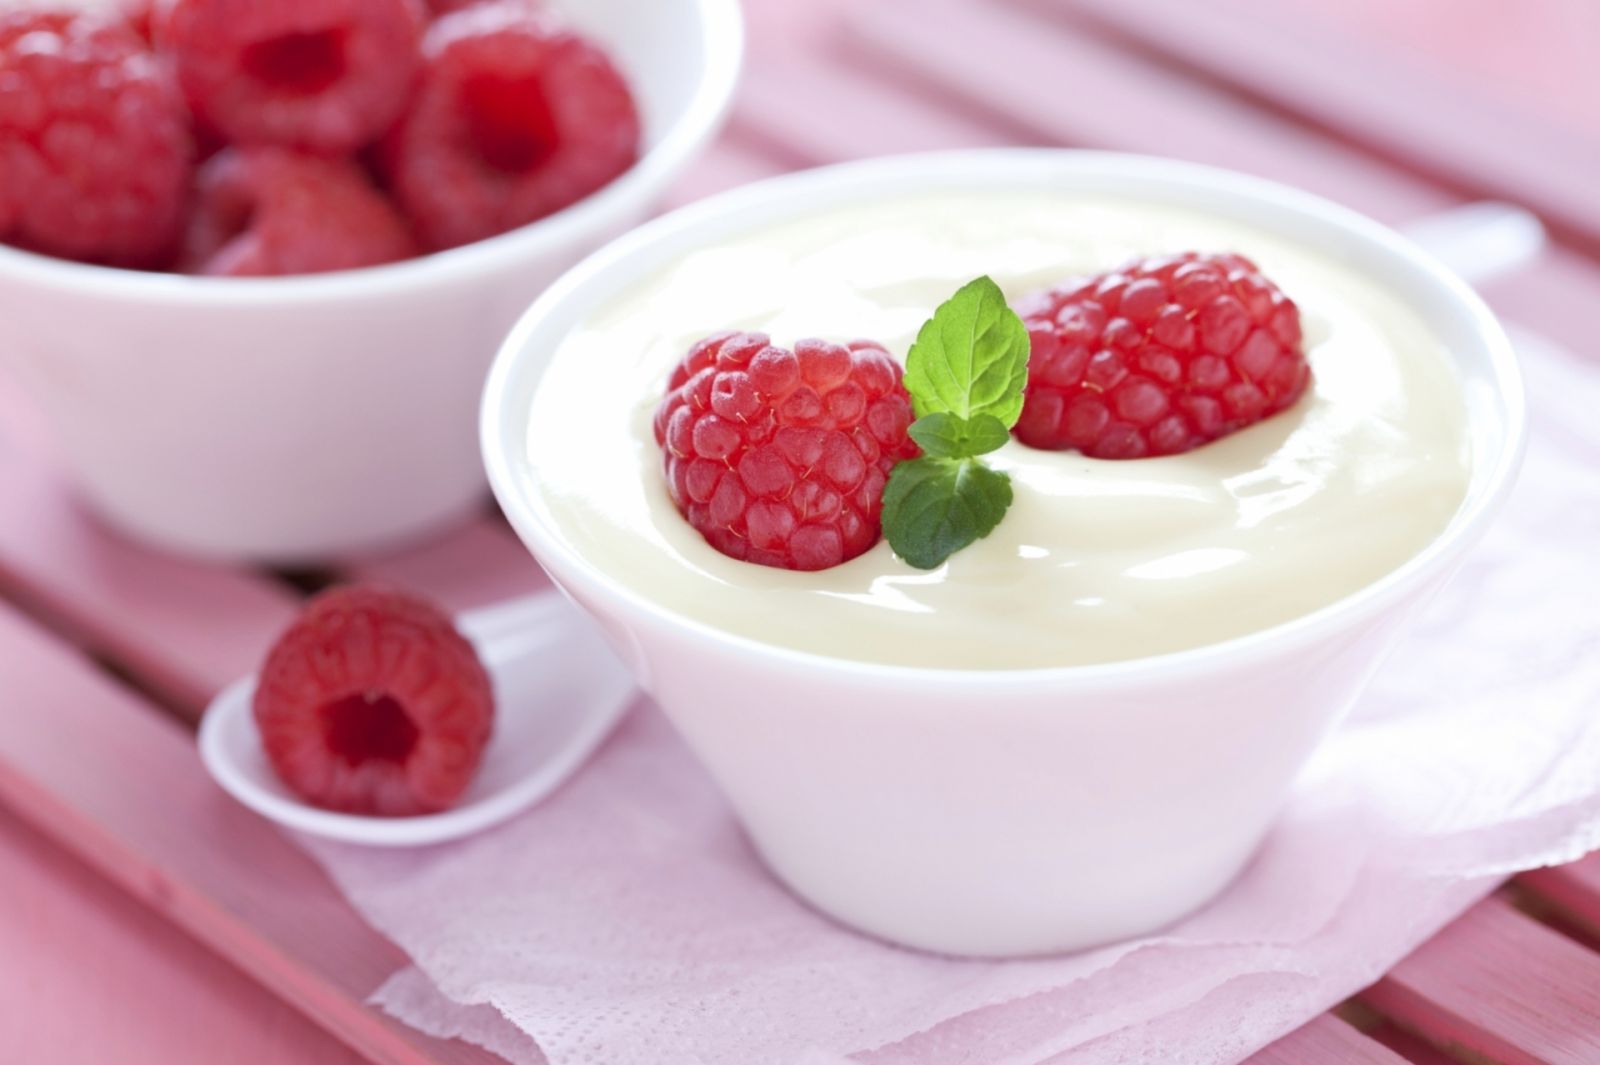 Йогурт в домашних условиях в мультиварке: рецепт с фото